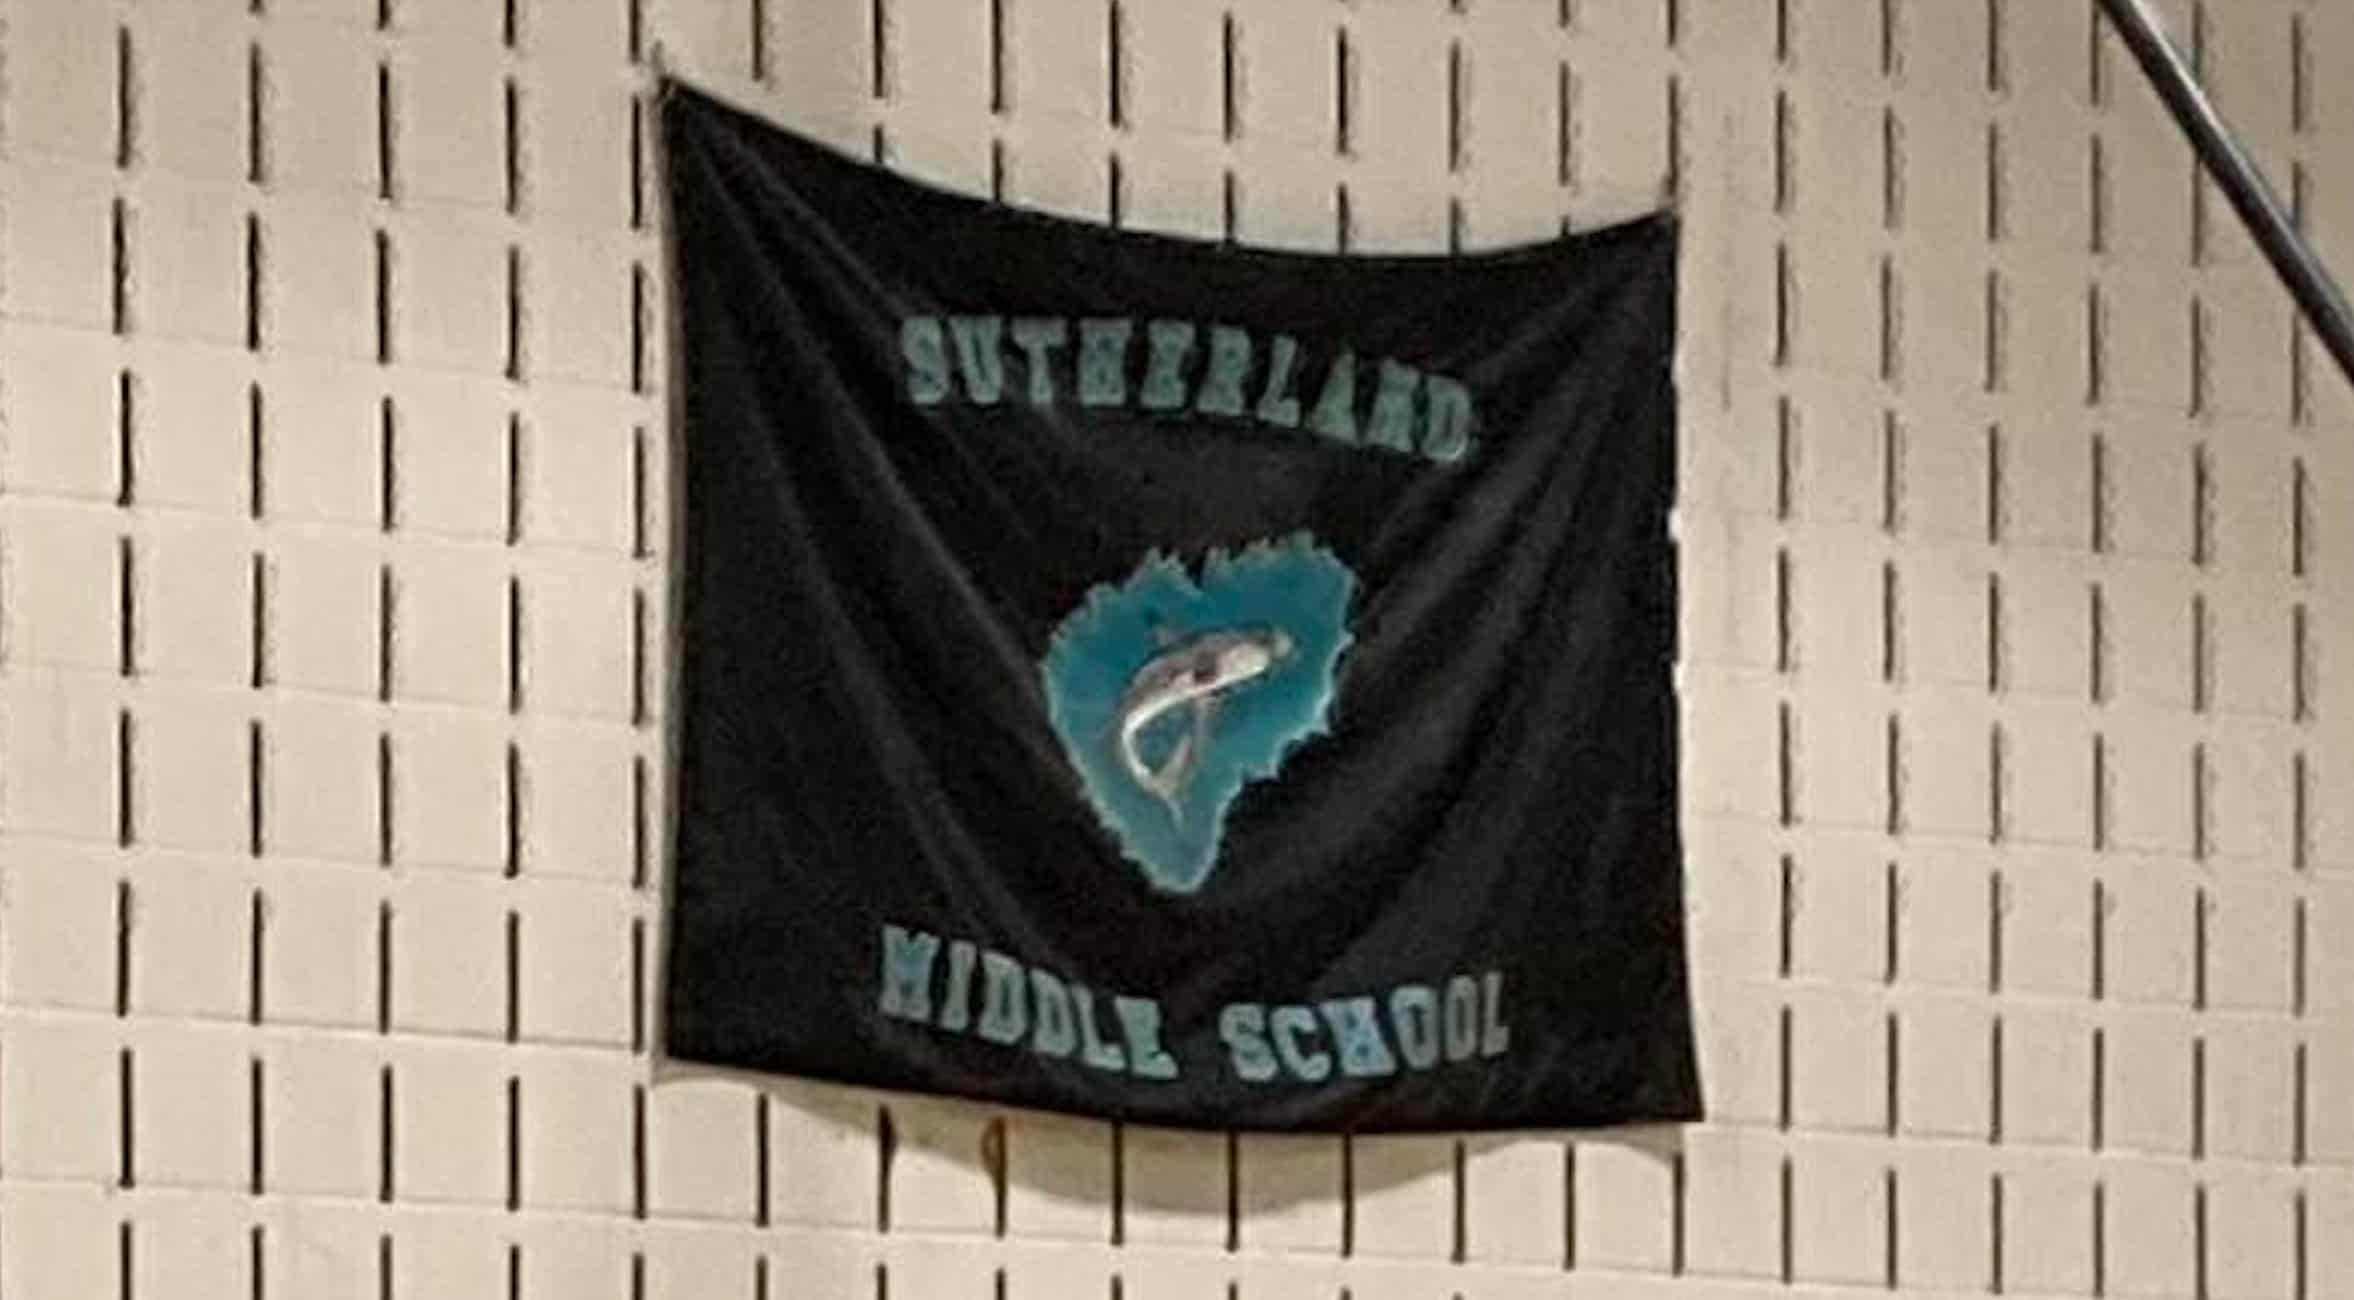 Sutherland Middle School flag